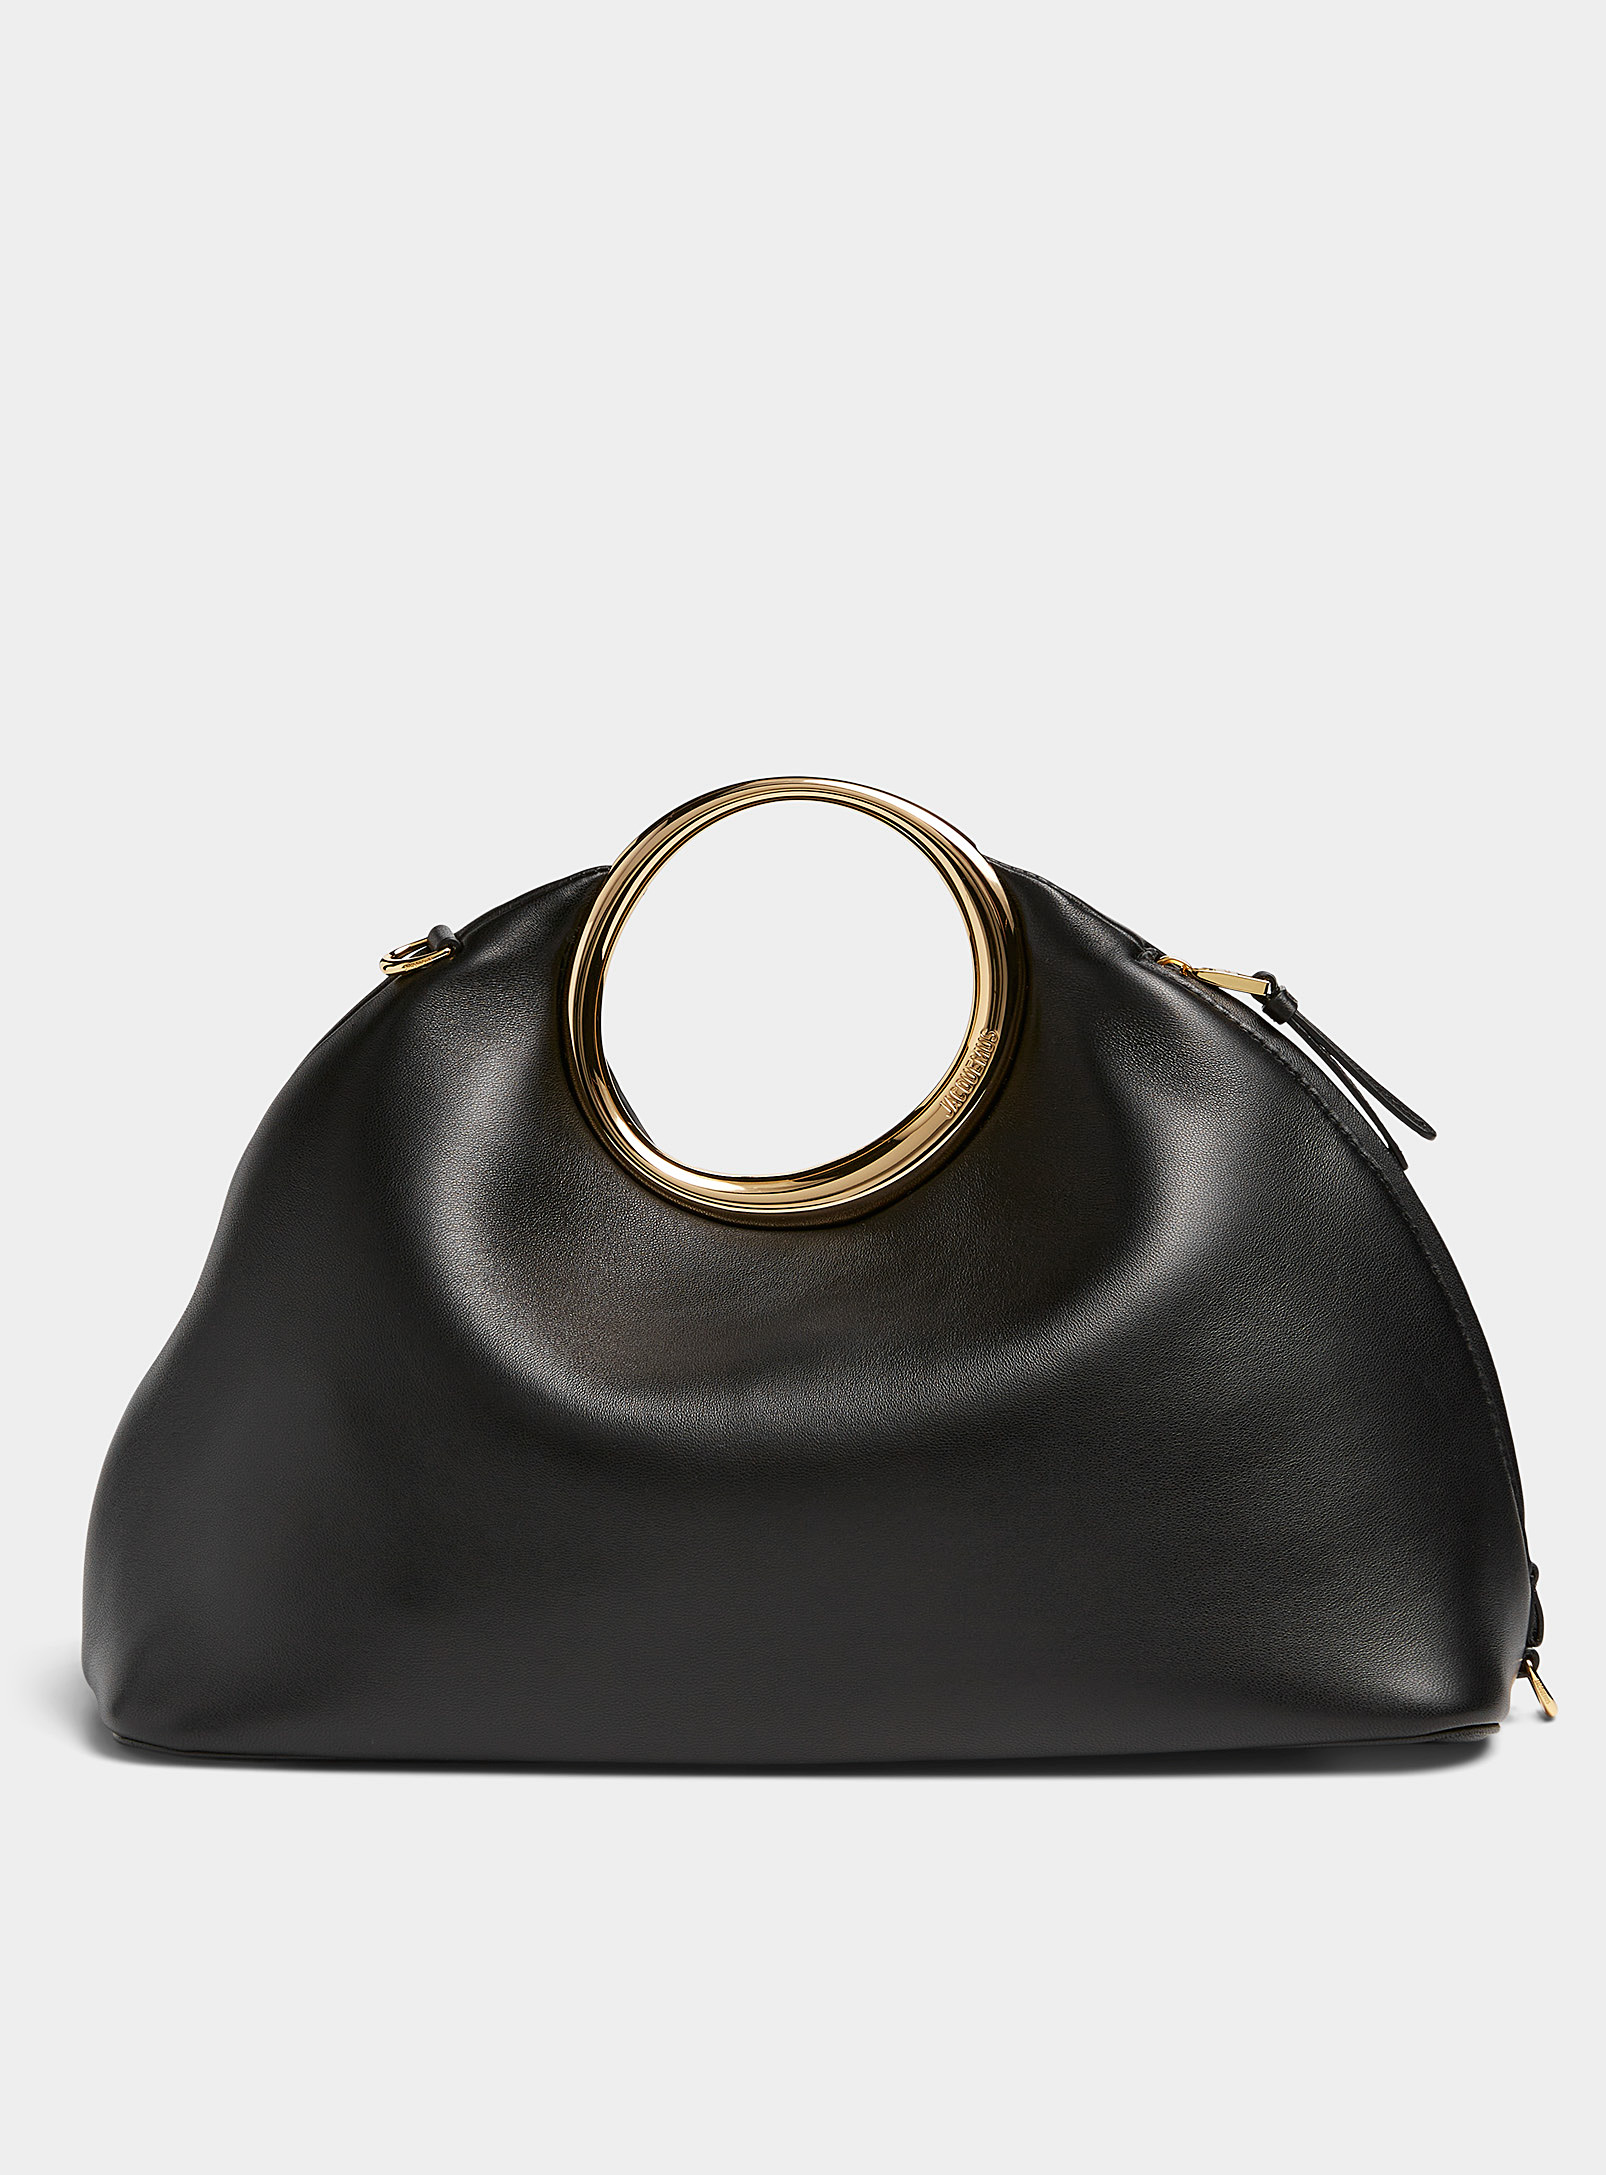 Jacquemus - Women's Calino handbag